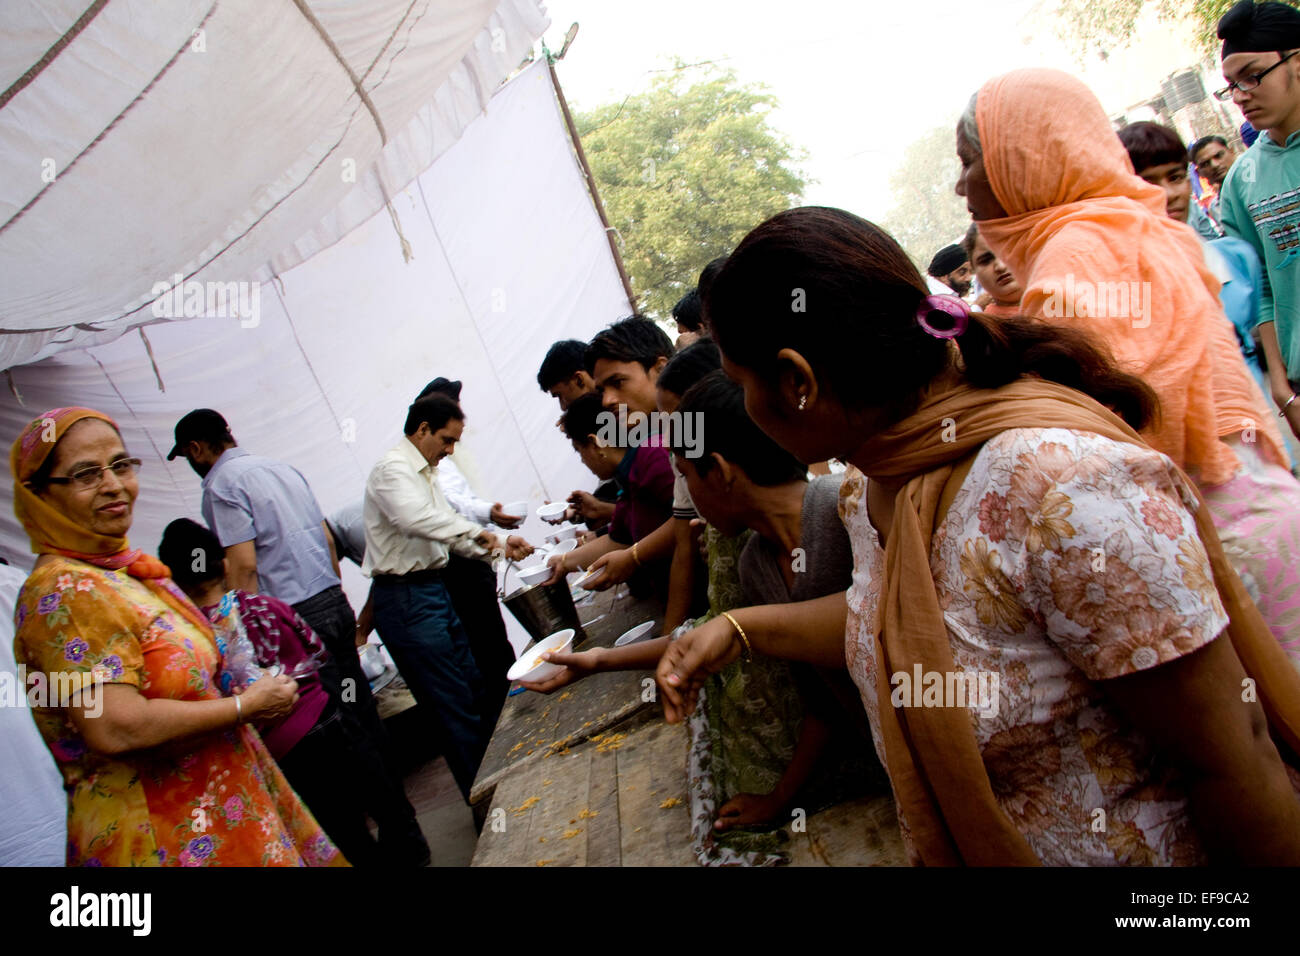 New Delhi, India - November 19, 2011: Sikh people celebrating Guru Nanak birth with a street parade and food distribution Stock Photo